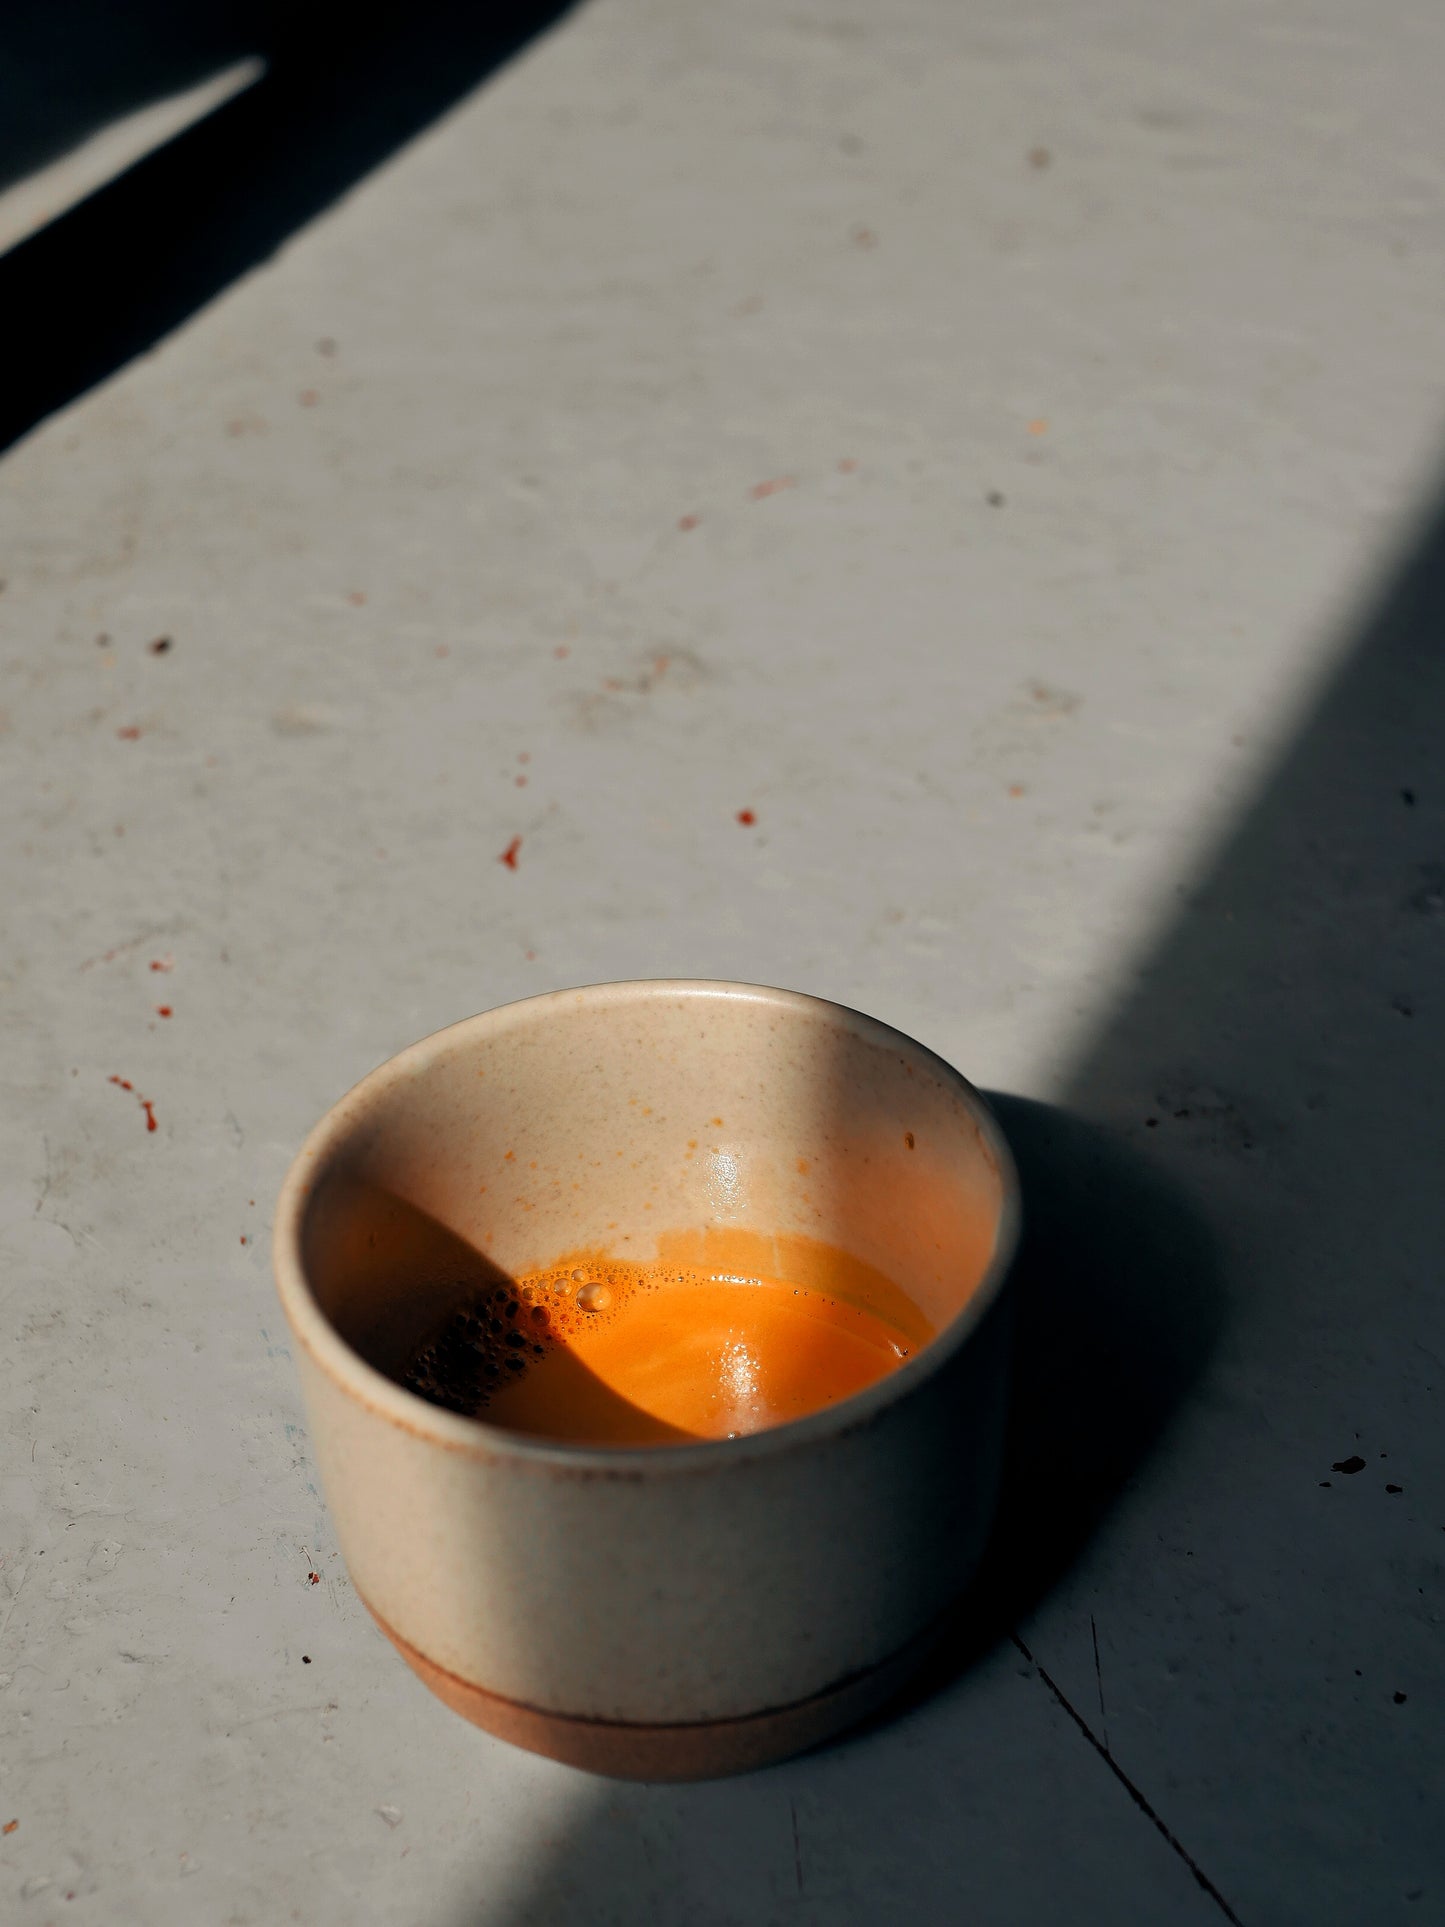 Solstice - Seasonal Espresso Blend